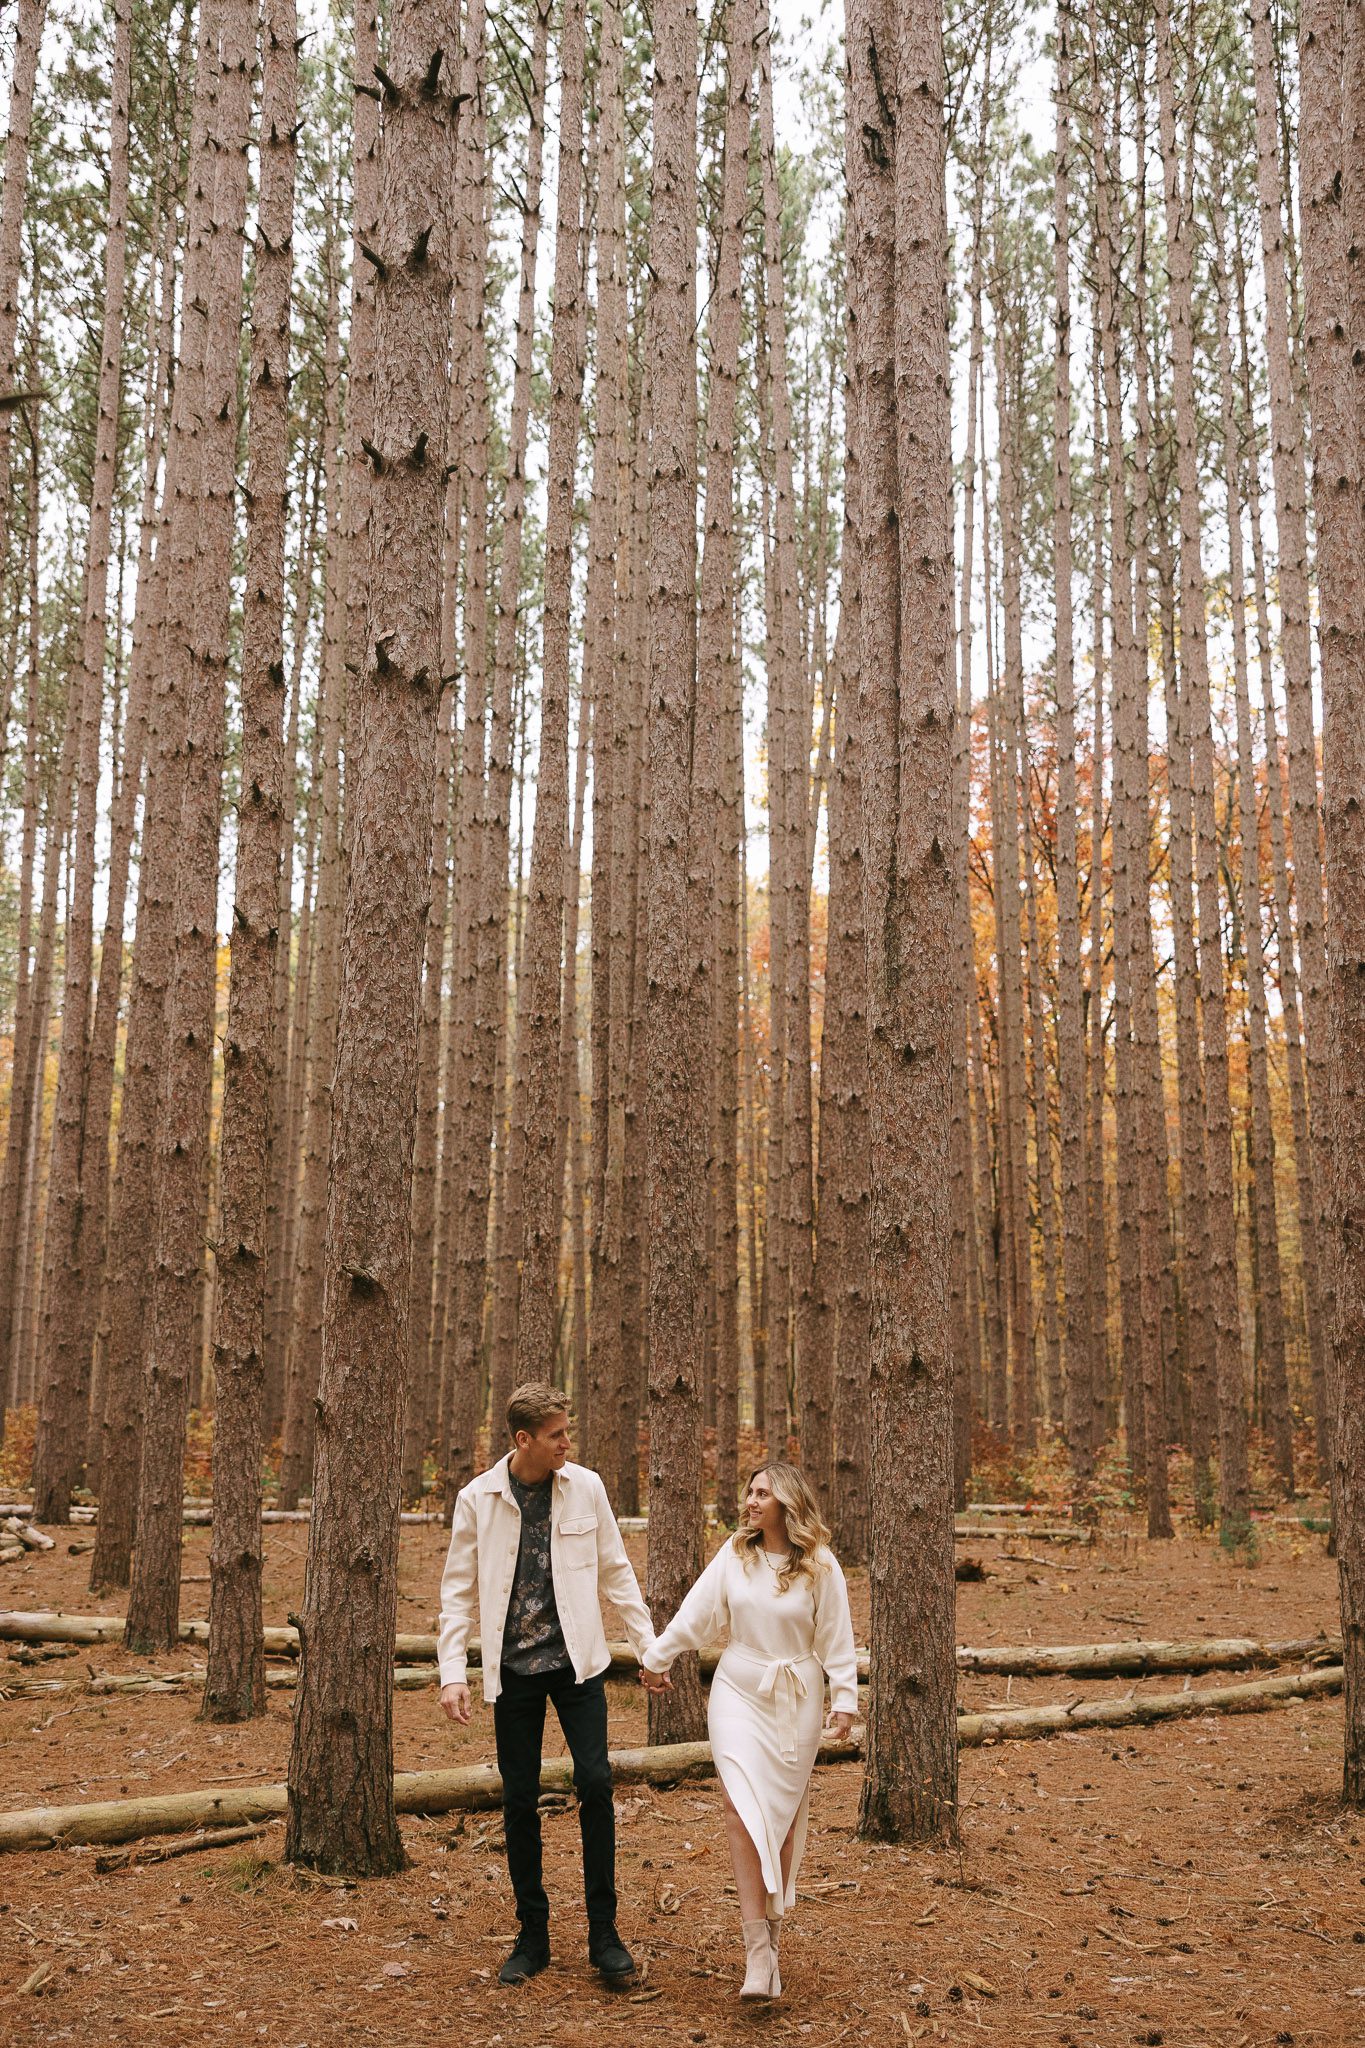 Sophia and Brad walk through an oak grove for their oak openings engagement photos